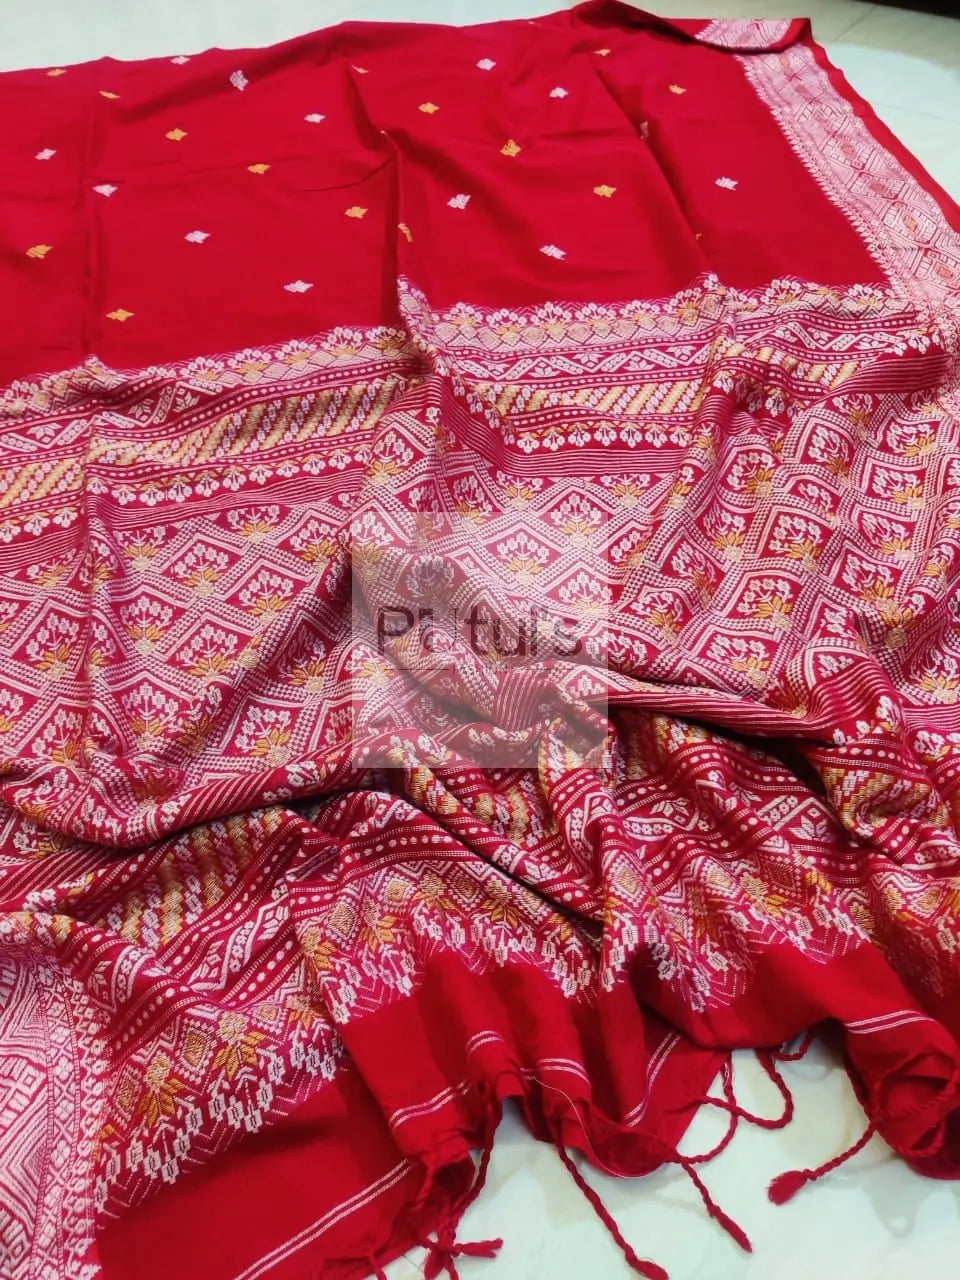 Mercerised cotton saree Putul's fashion